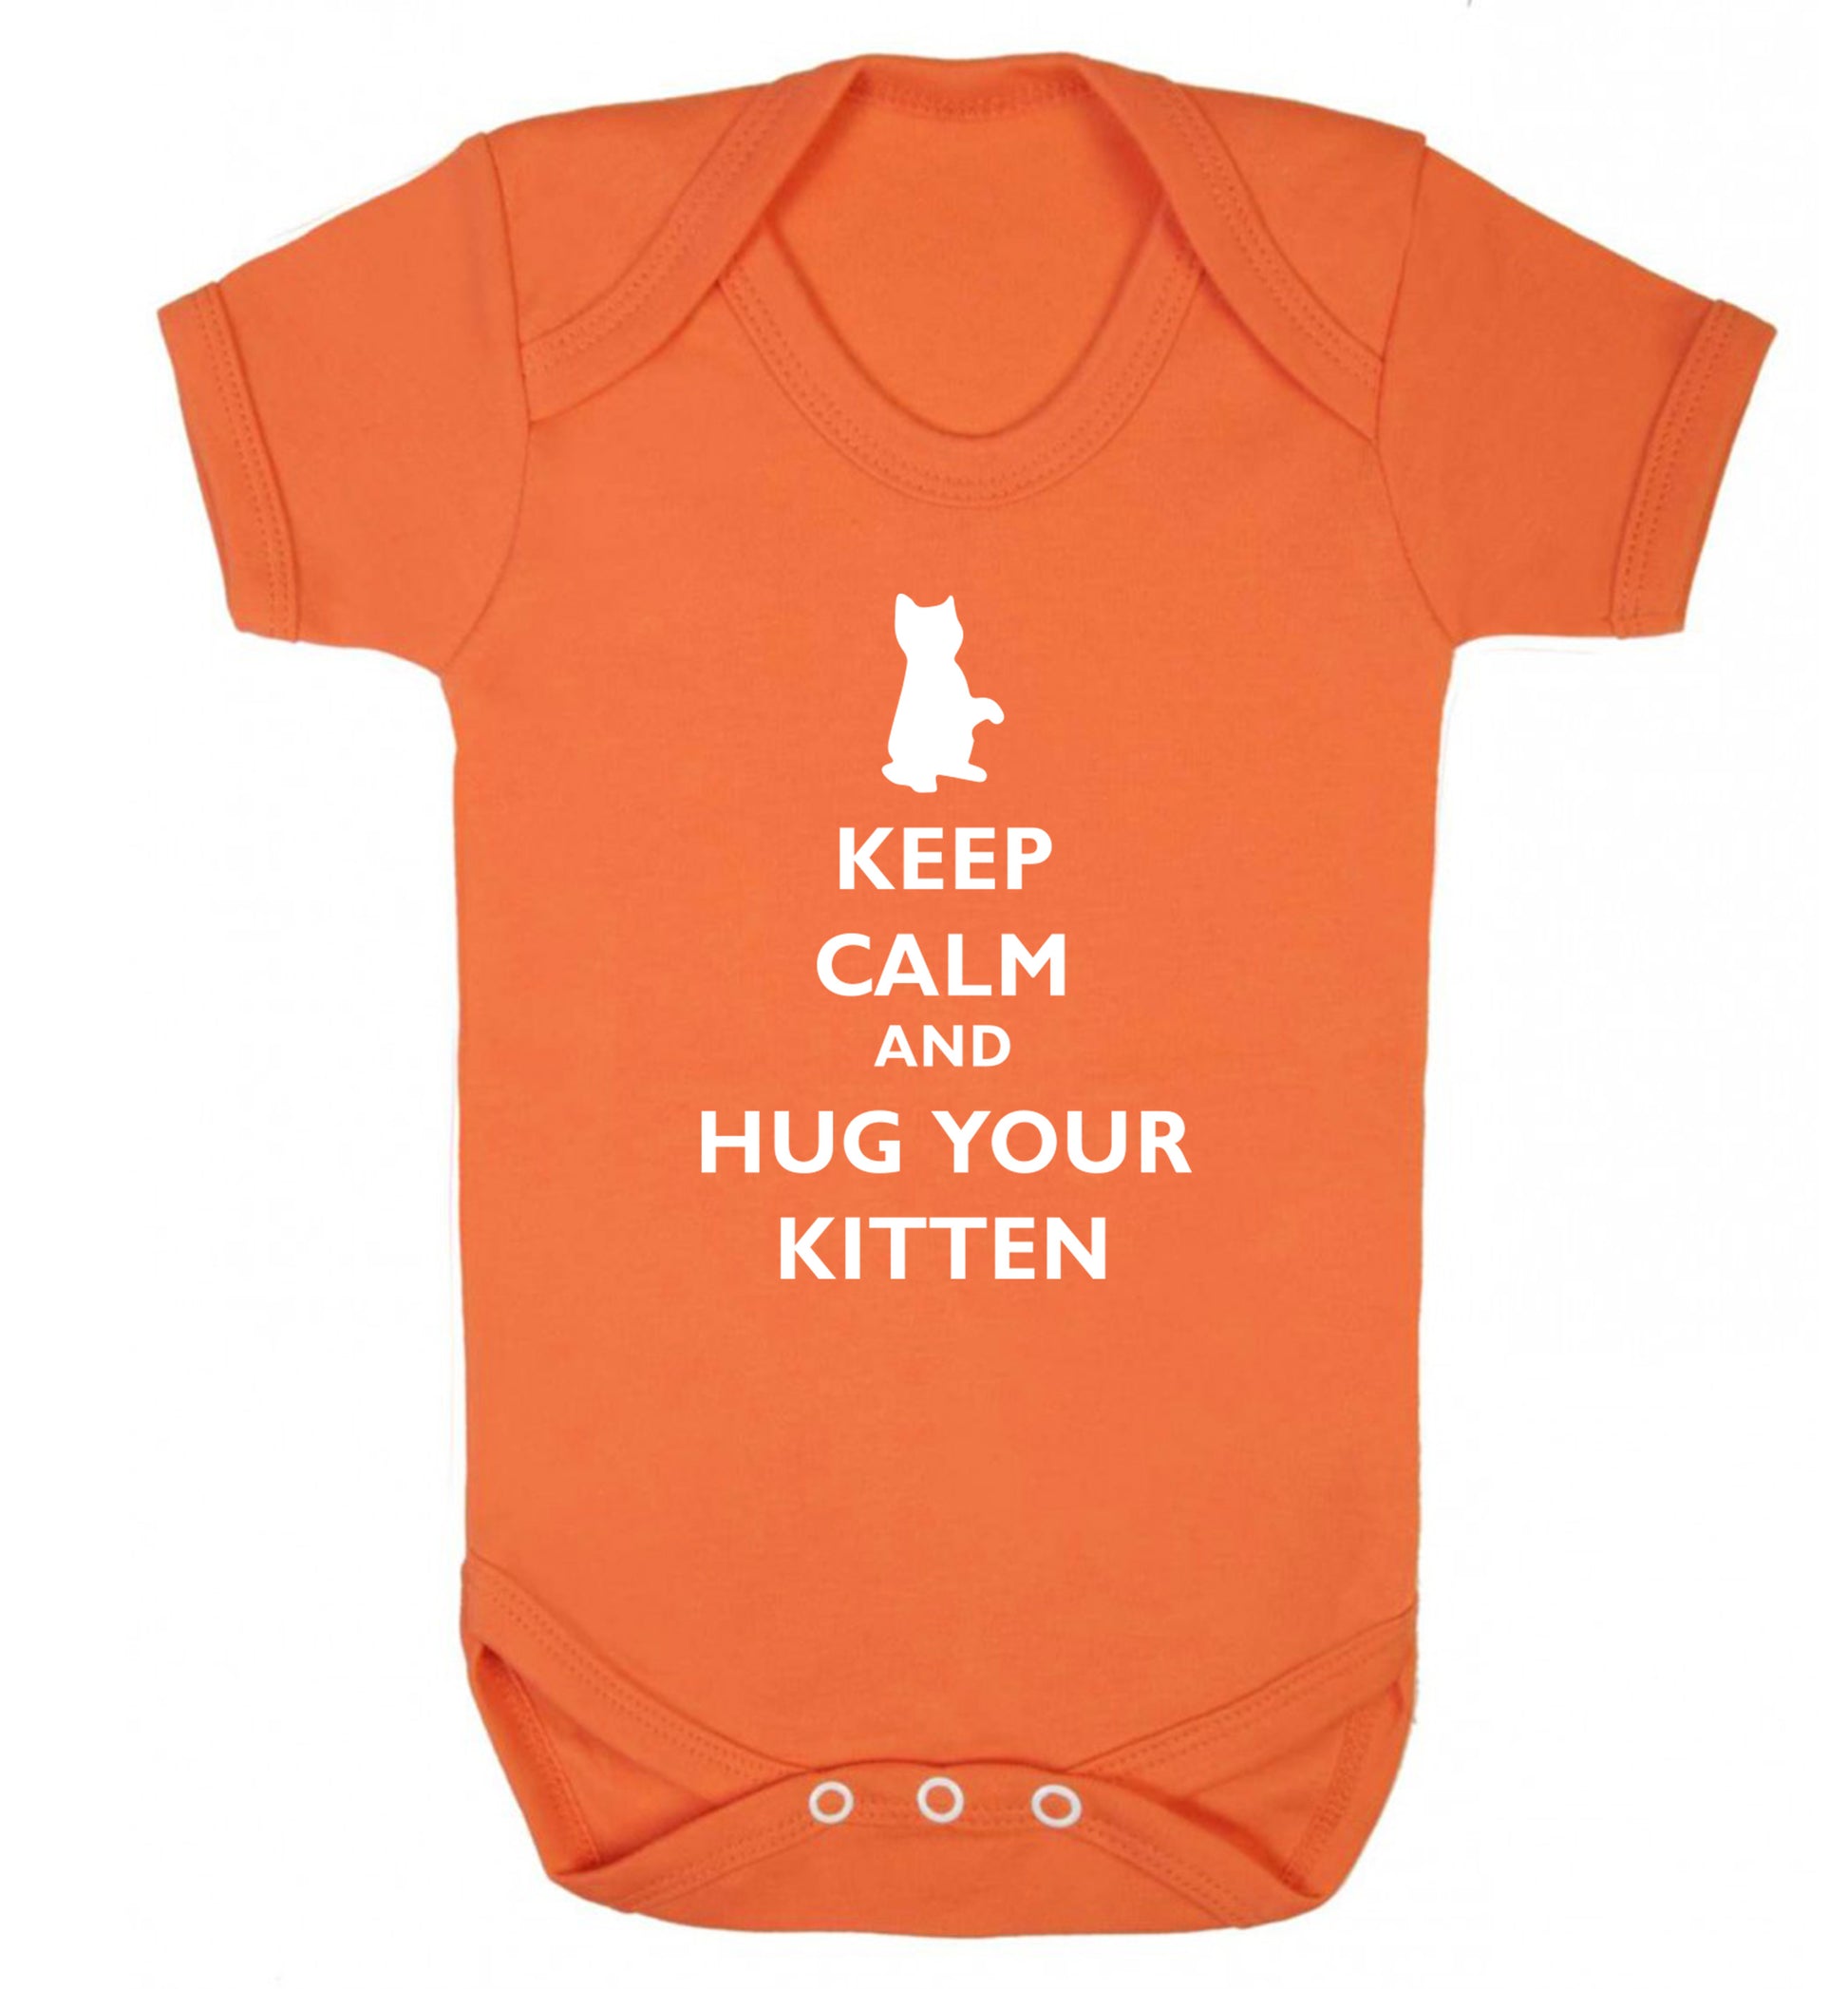 Keep calm and hug your kitten Baby Vest orange 18-24 months